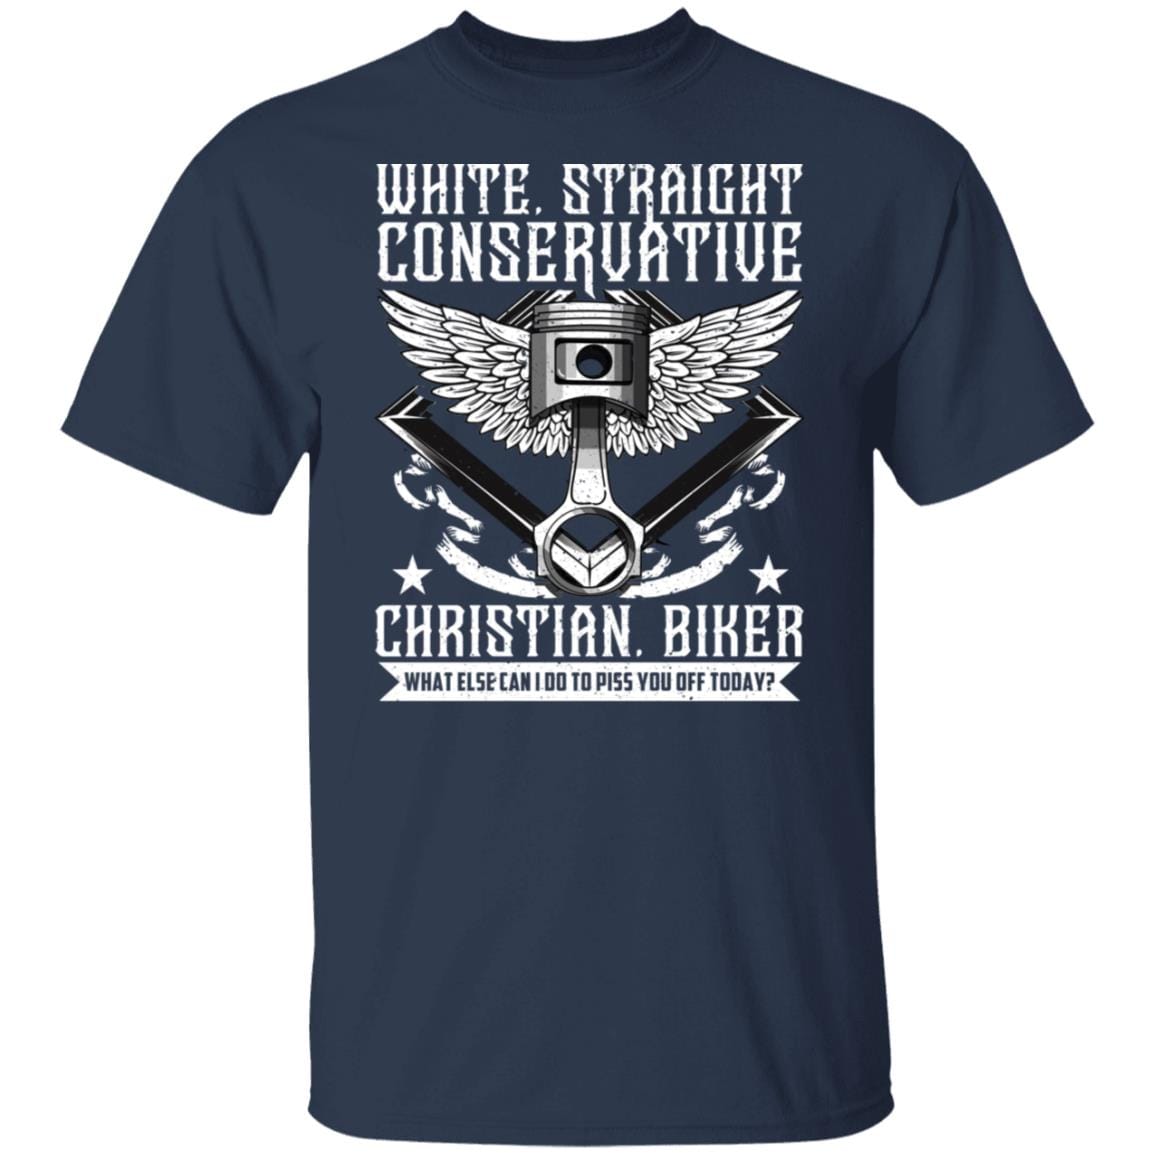 White Straight Conservative Christian Biker Apparel